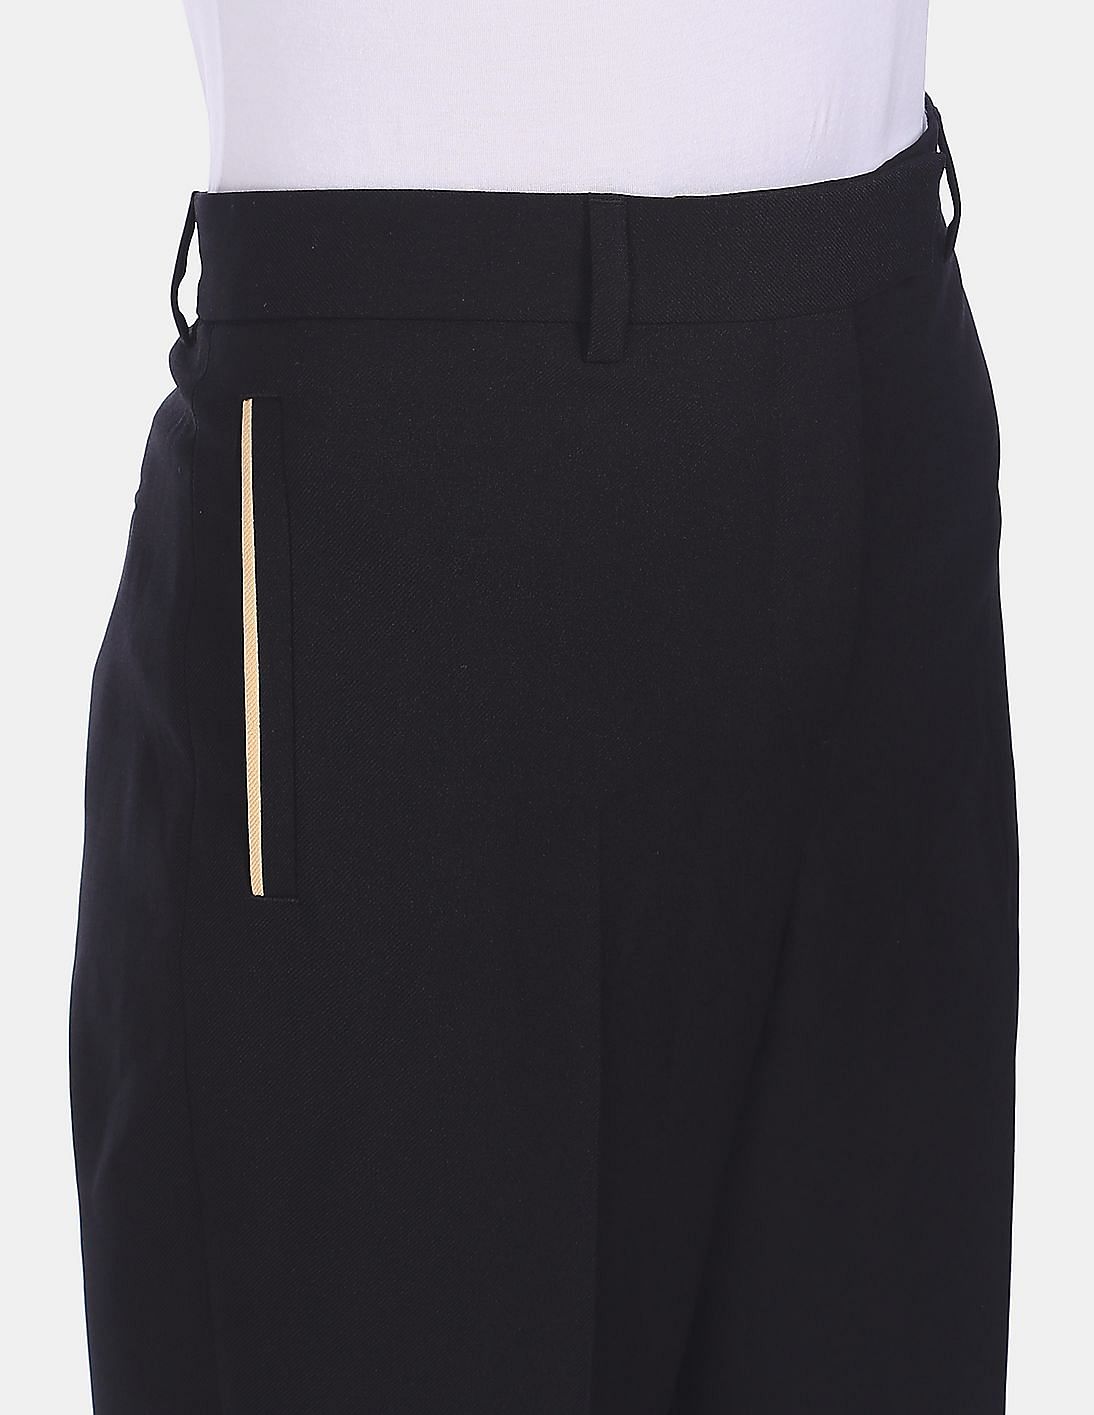 Buy Calvin Klein Women Black Uniform Twill Cigarette Pants - NNNOW.com